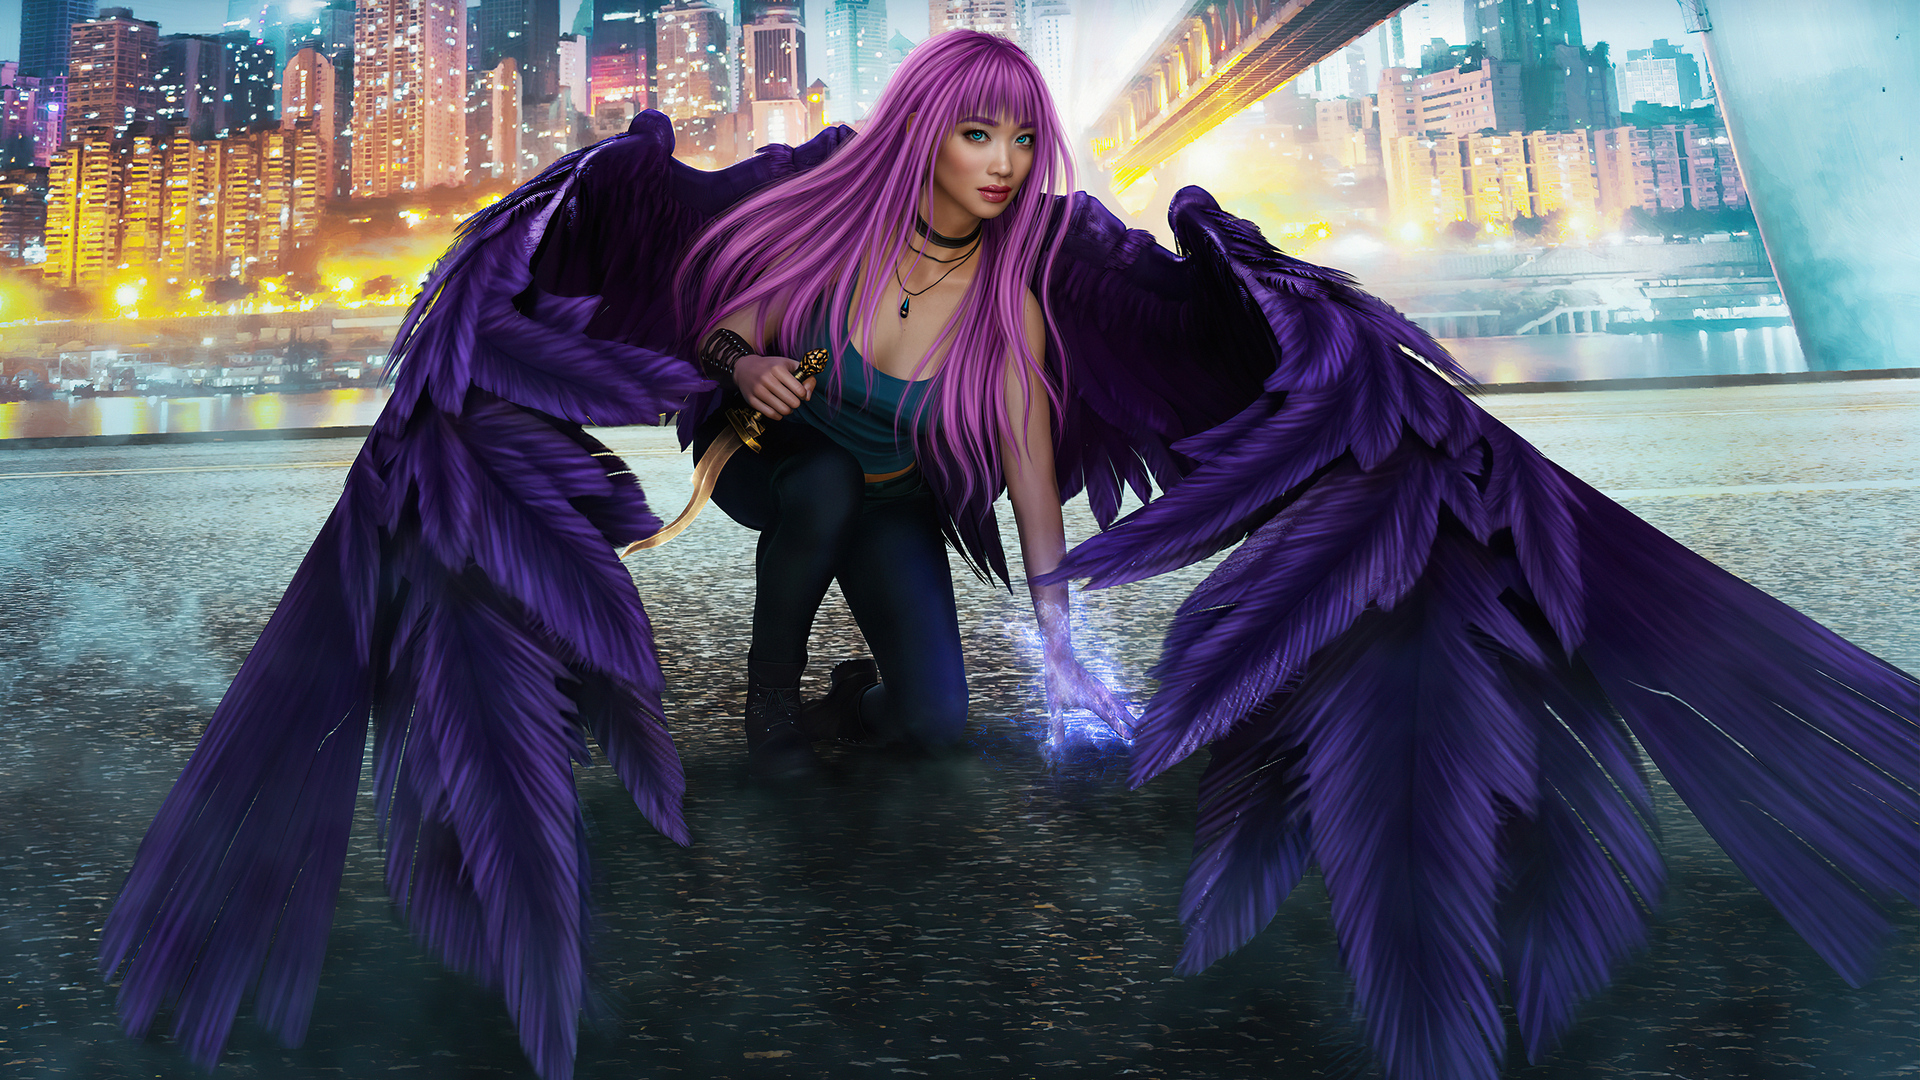 General 1920x1080 pink hair wings women dagger long hair necklace Asian fantasy art fantasy girl